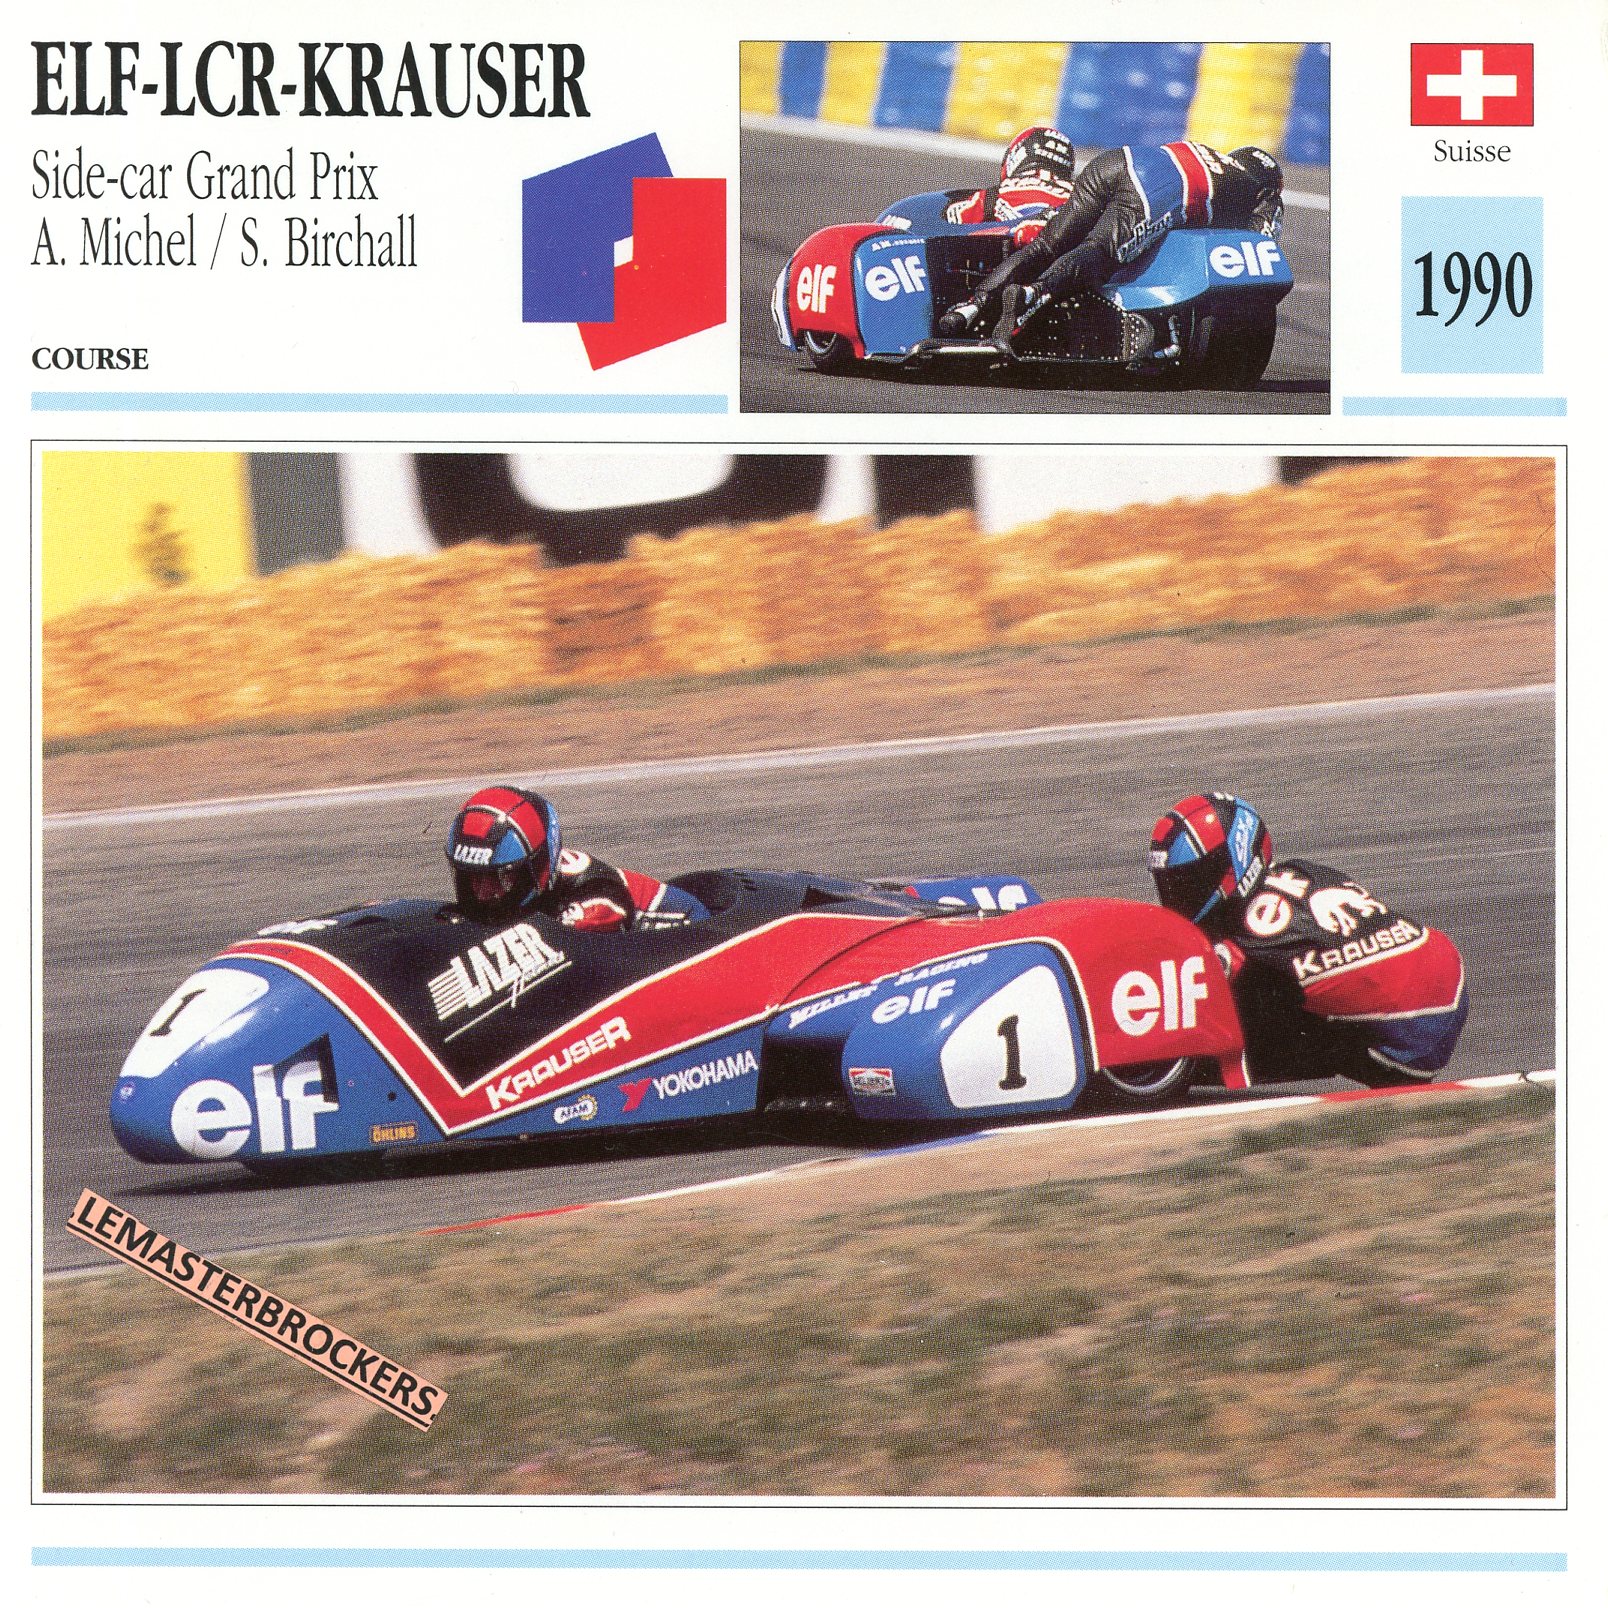 FICHE-MOTO-SIDE-CAR-ELF-LCR-KRAUSER-1990-LEMASTERBROCKERS-CARD-MOTORCYCLE